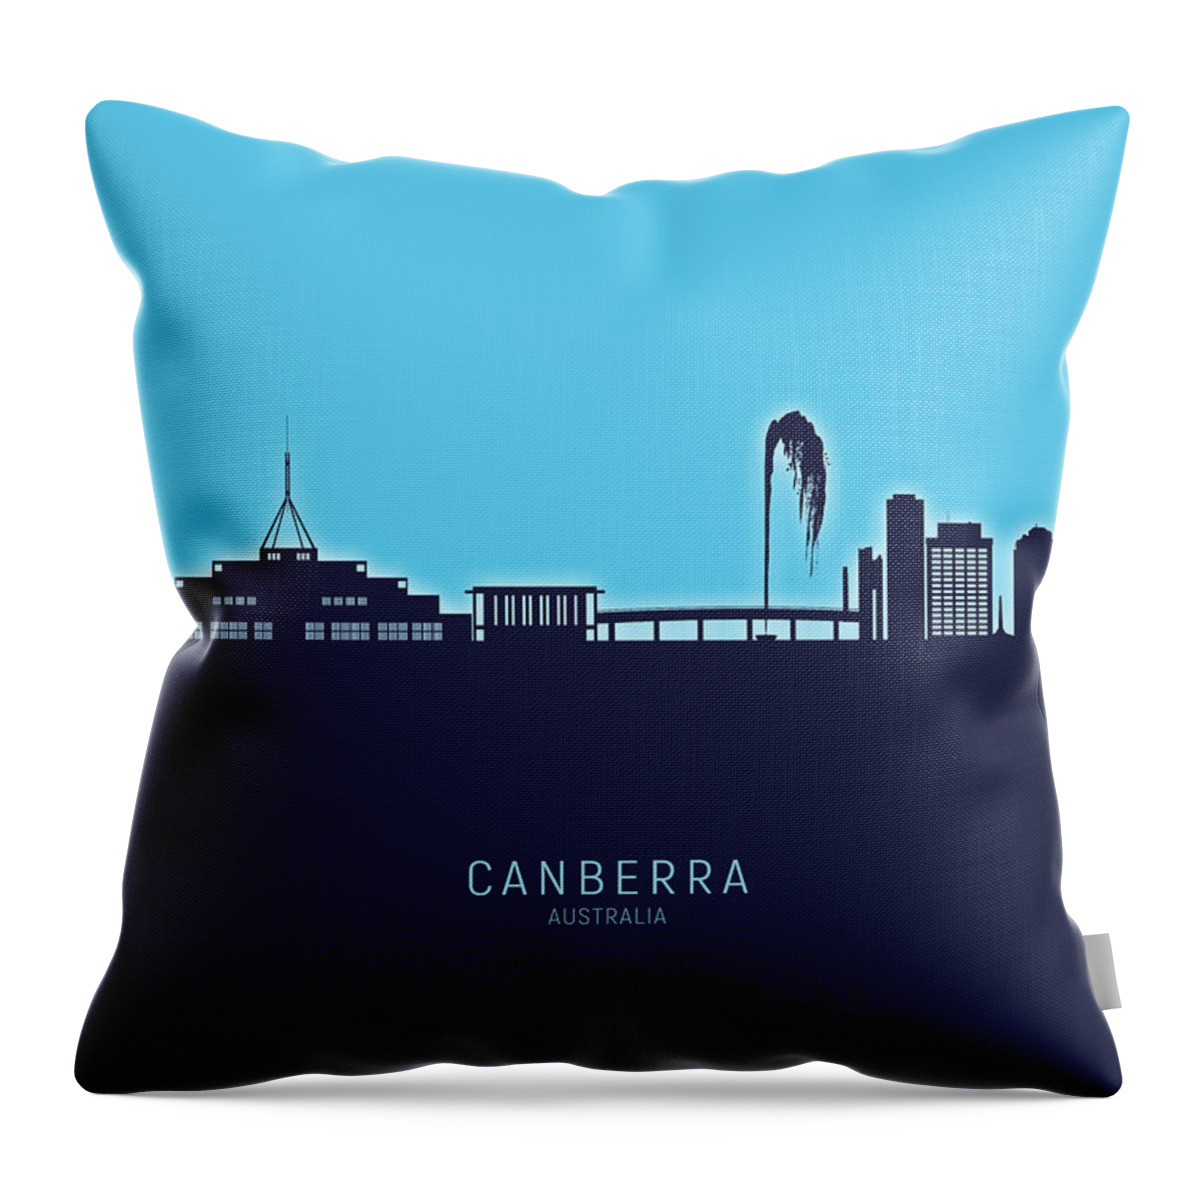 Canberra Throw Pillow featuring the digital art Canberra Australia Skyline #08 by Michael Tompsett